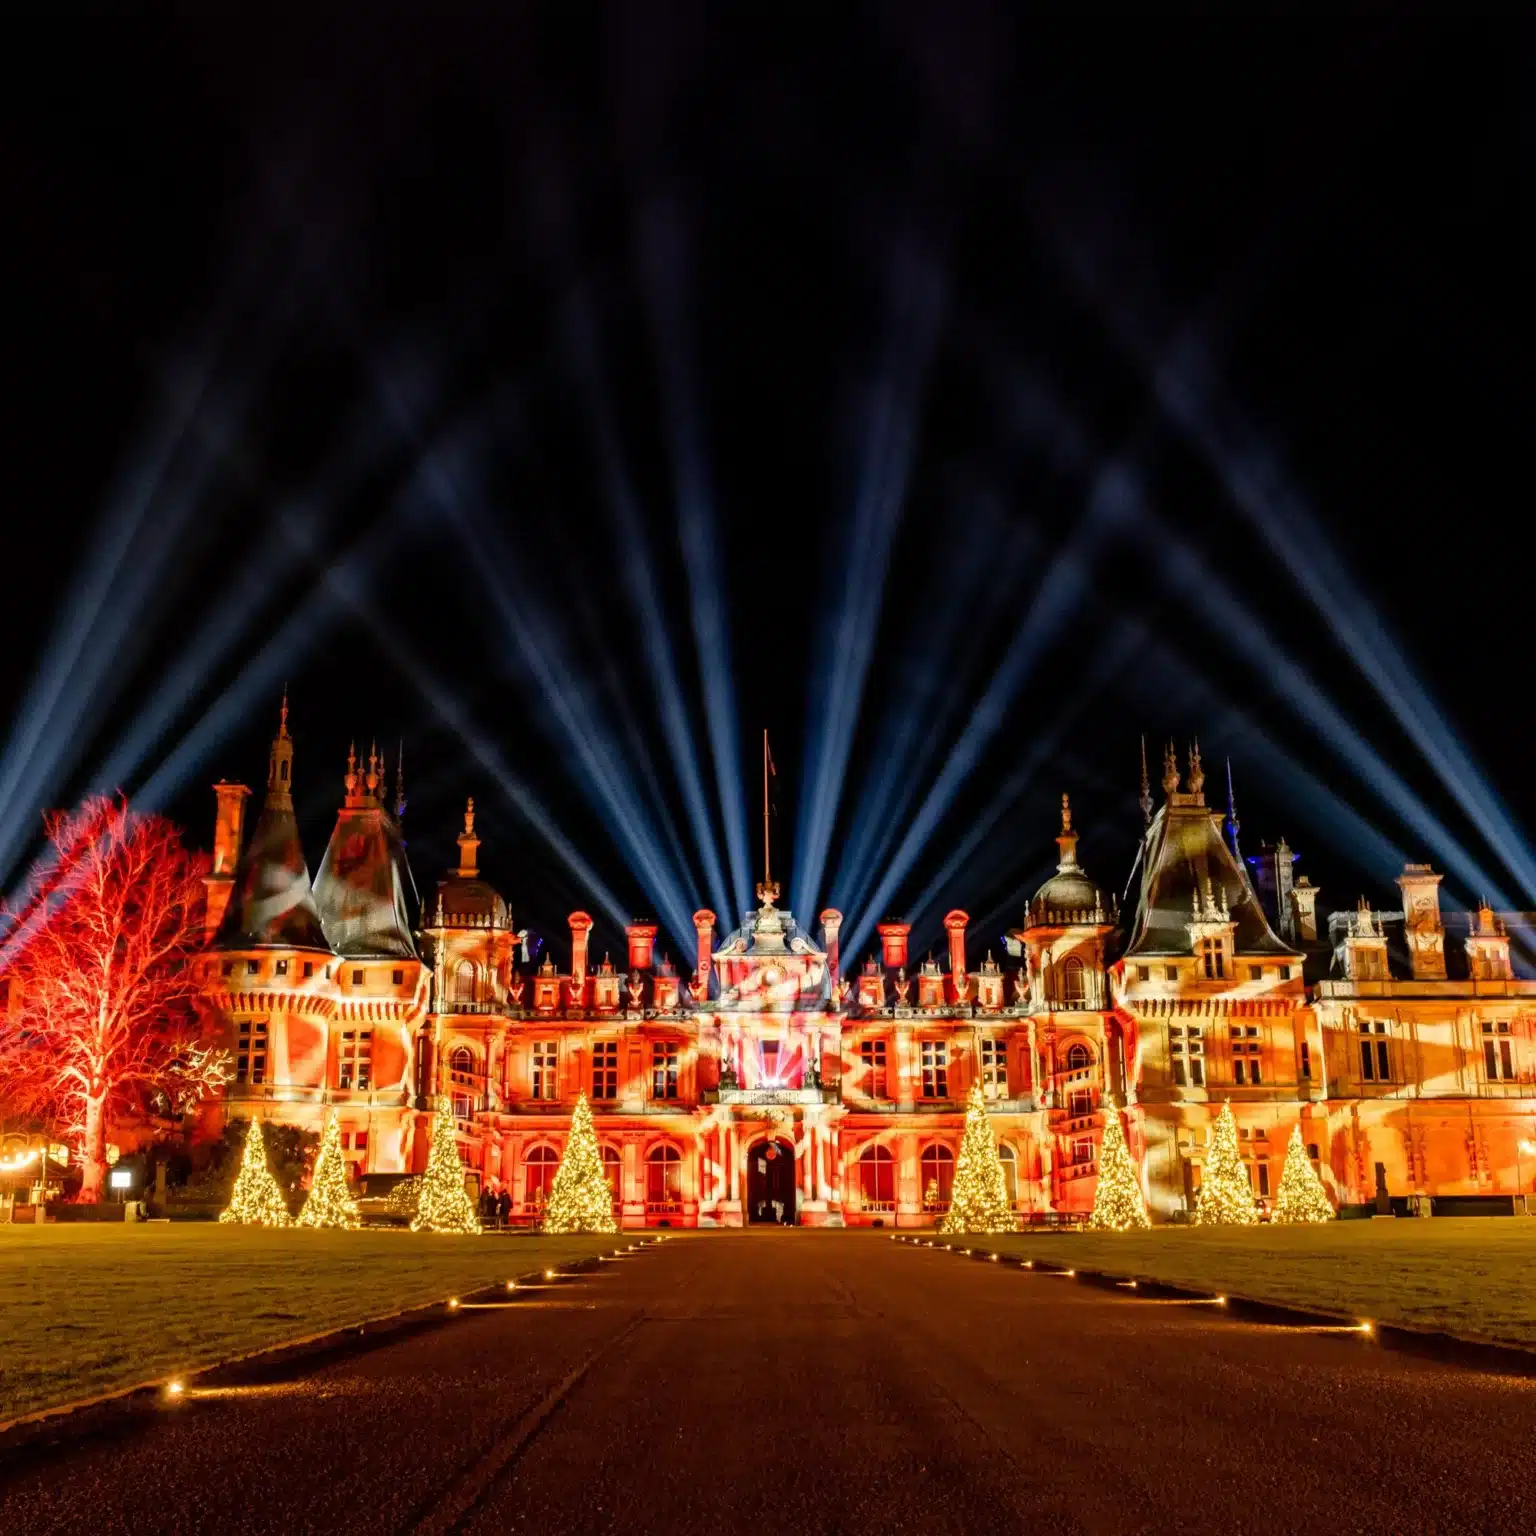 waddesdon manor illuminated for christmas with winter lights